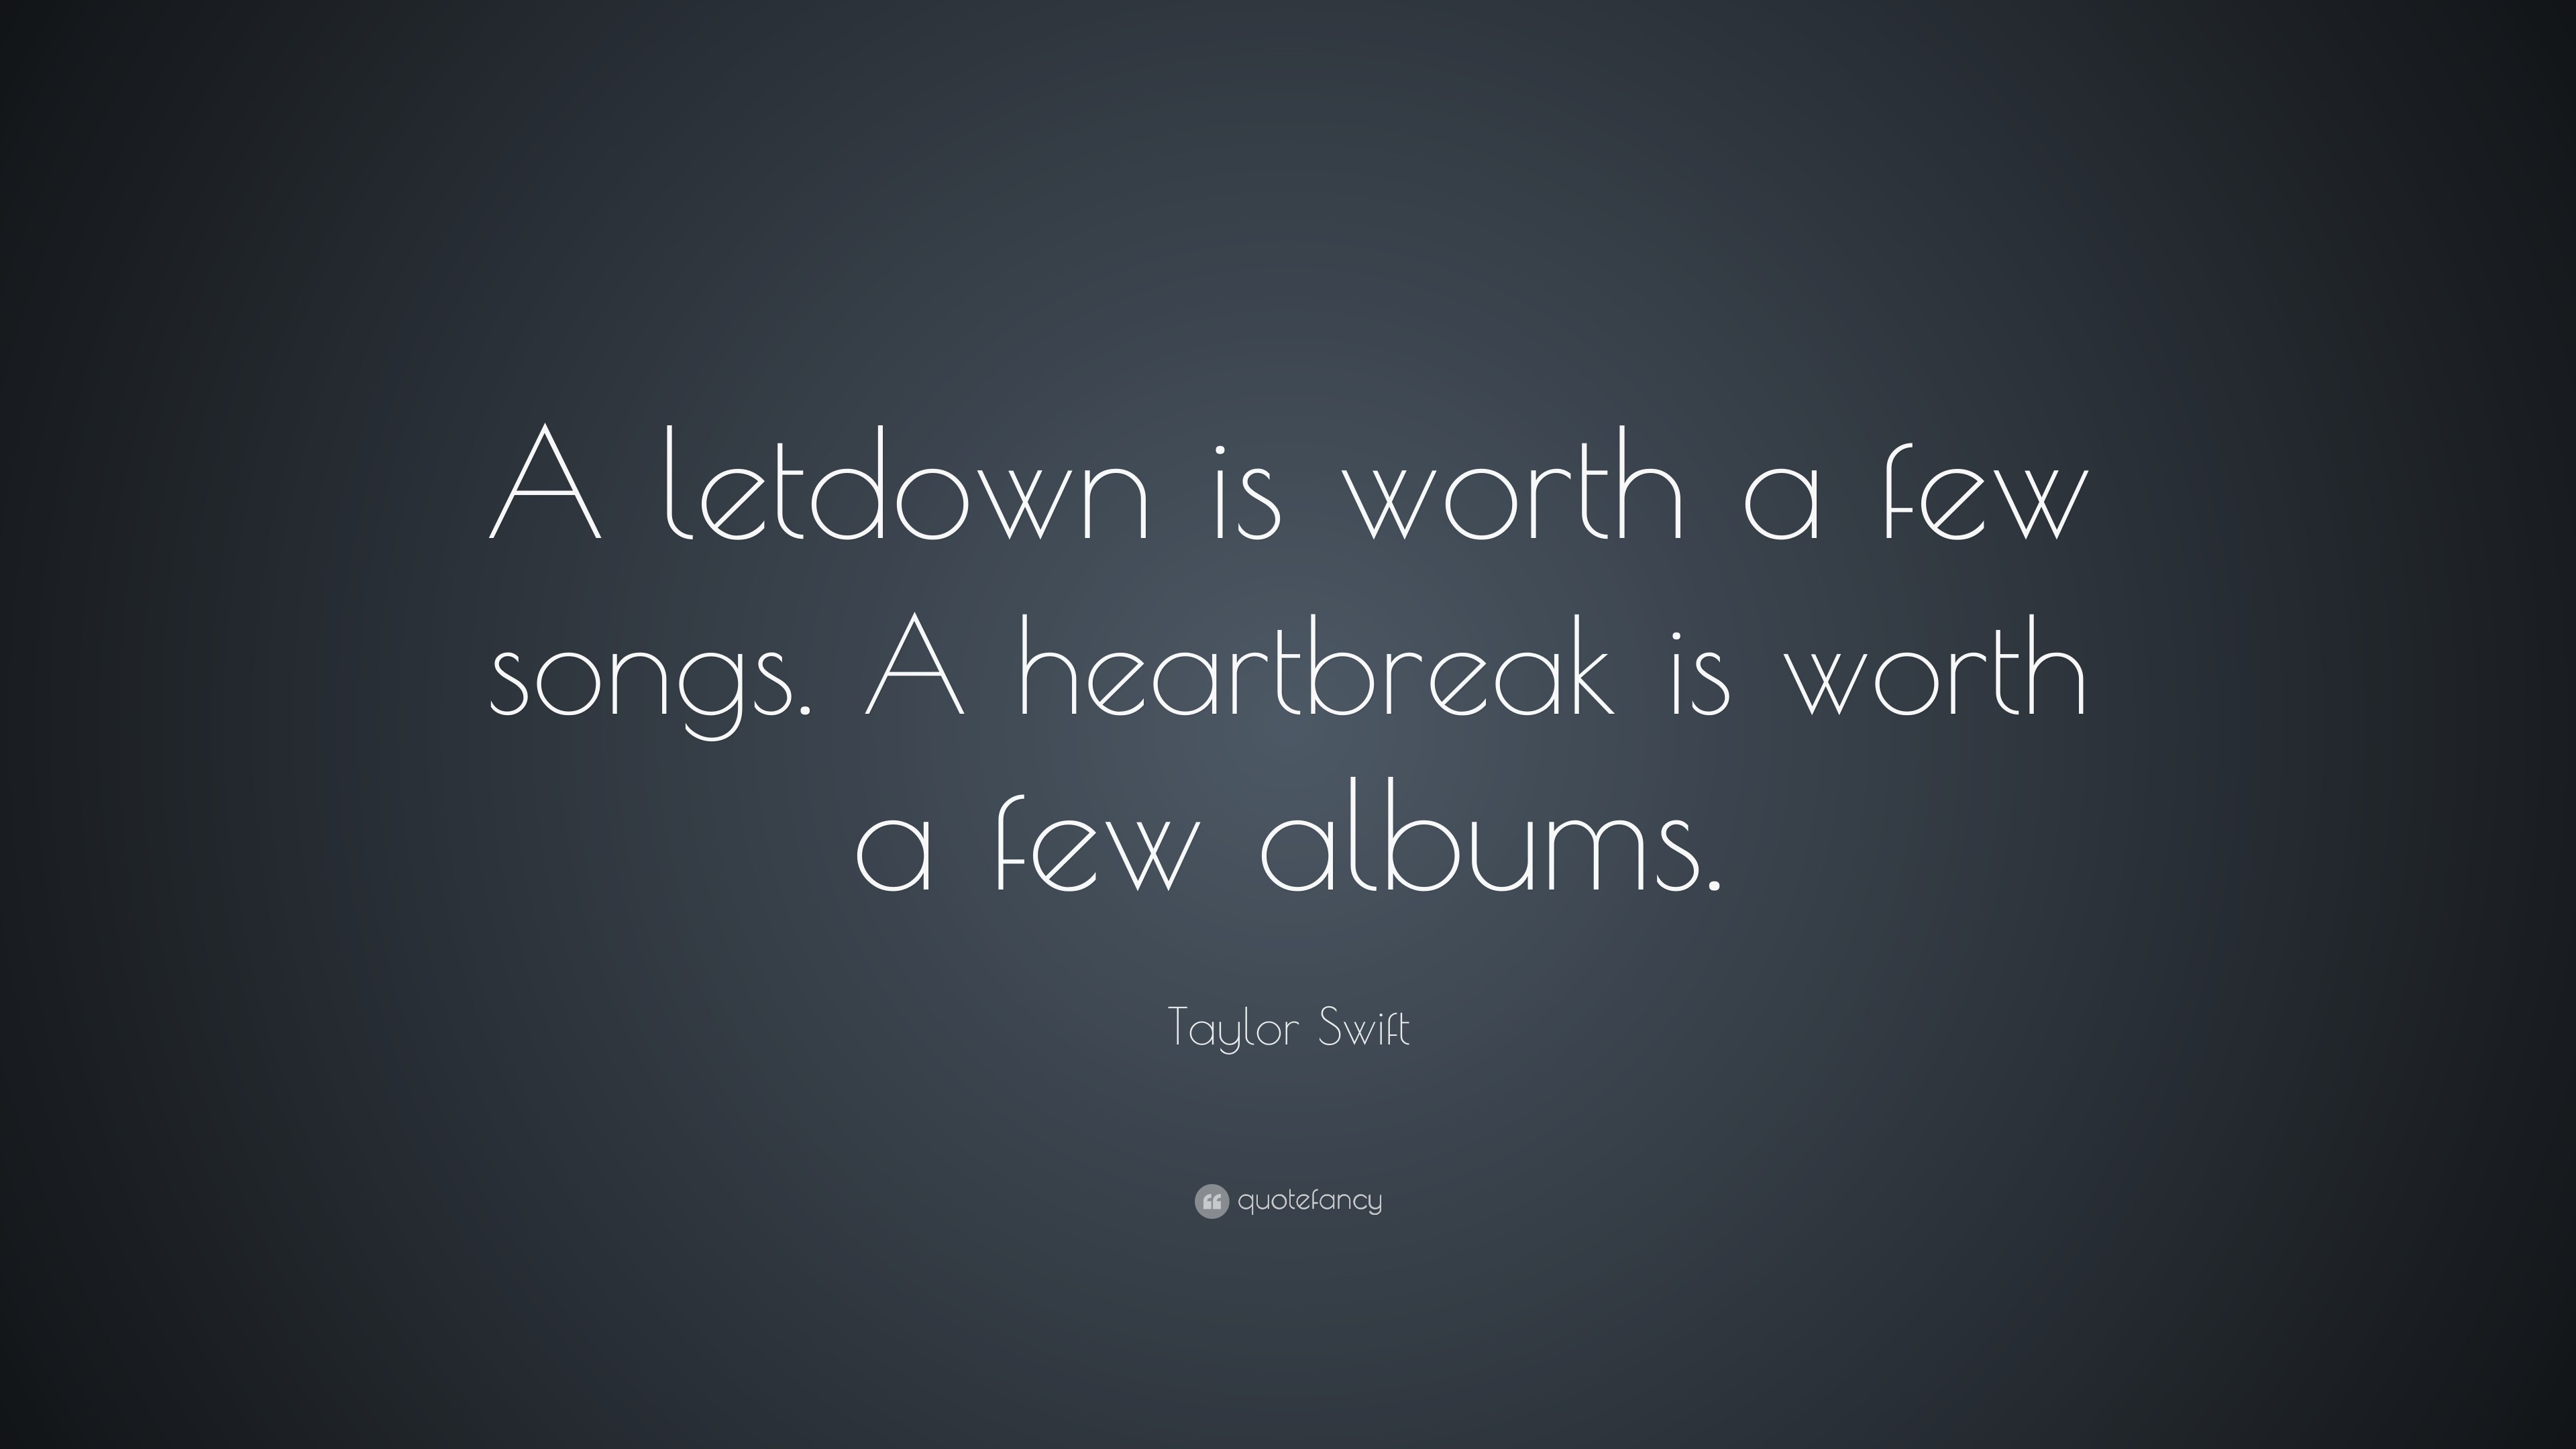 3840x2160 Taylor Swift Quote: “A letdown is worth a few songs. A heartbreak is